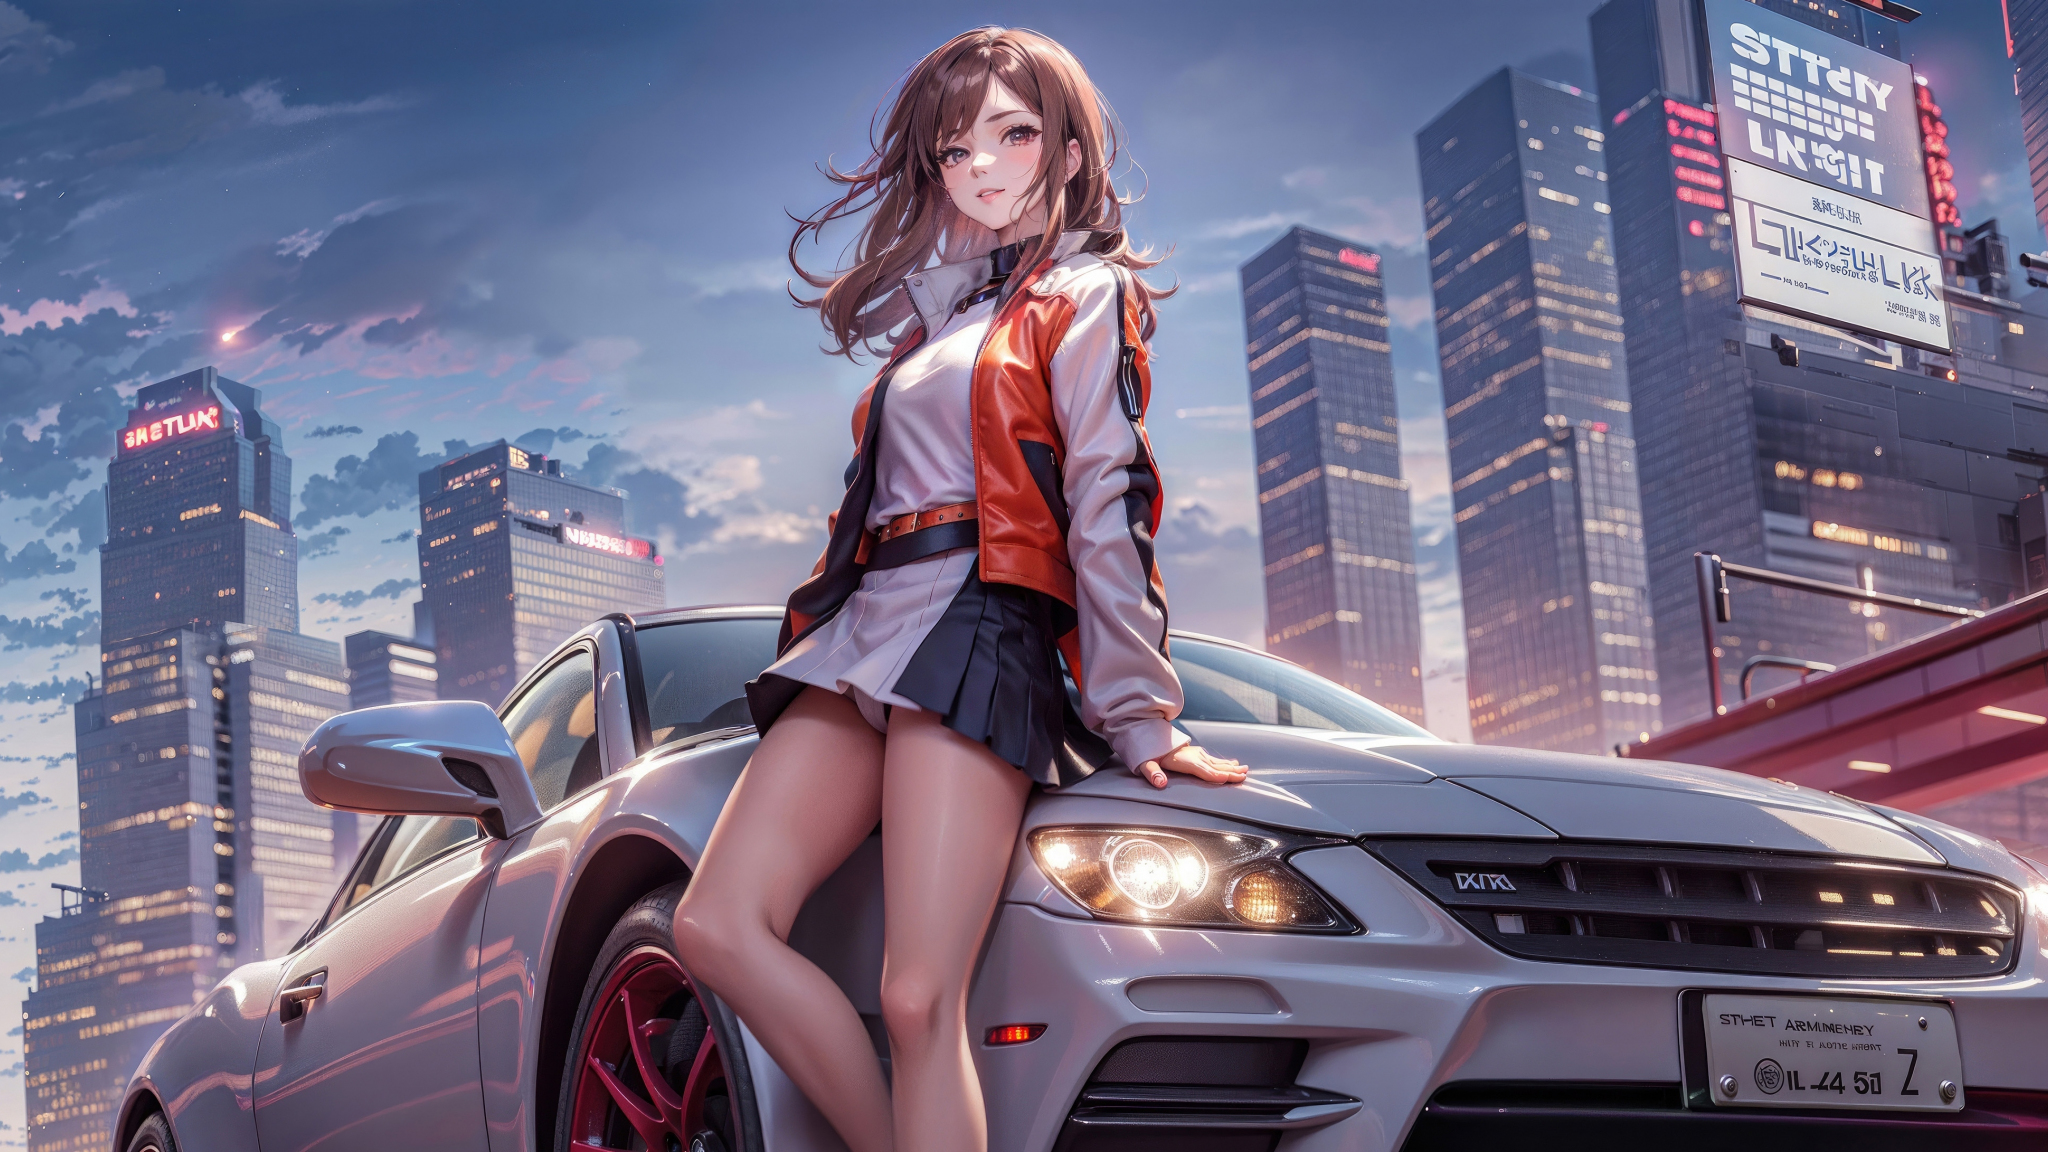 Anime girl with a car, beautiful, art, 2048x1152 wallpaper